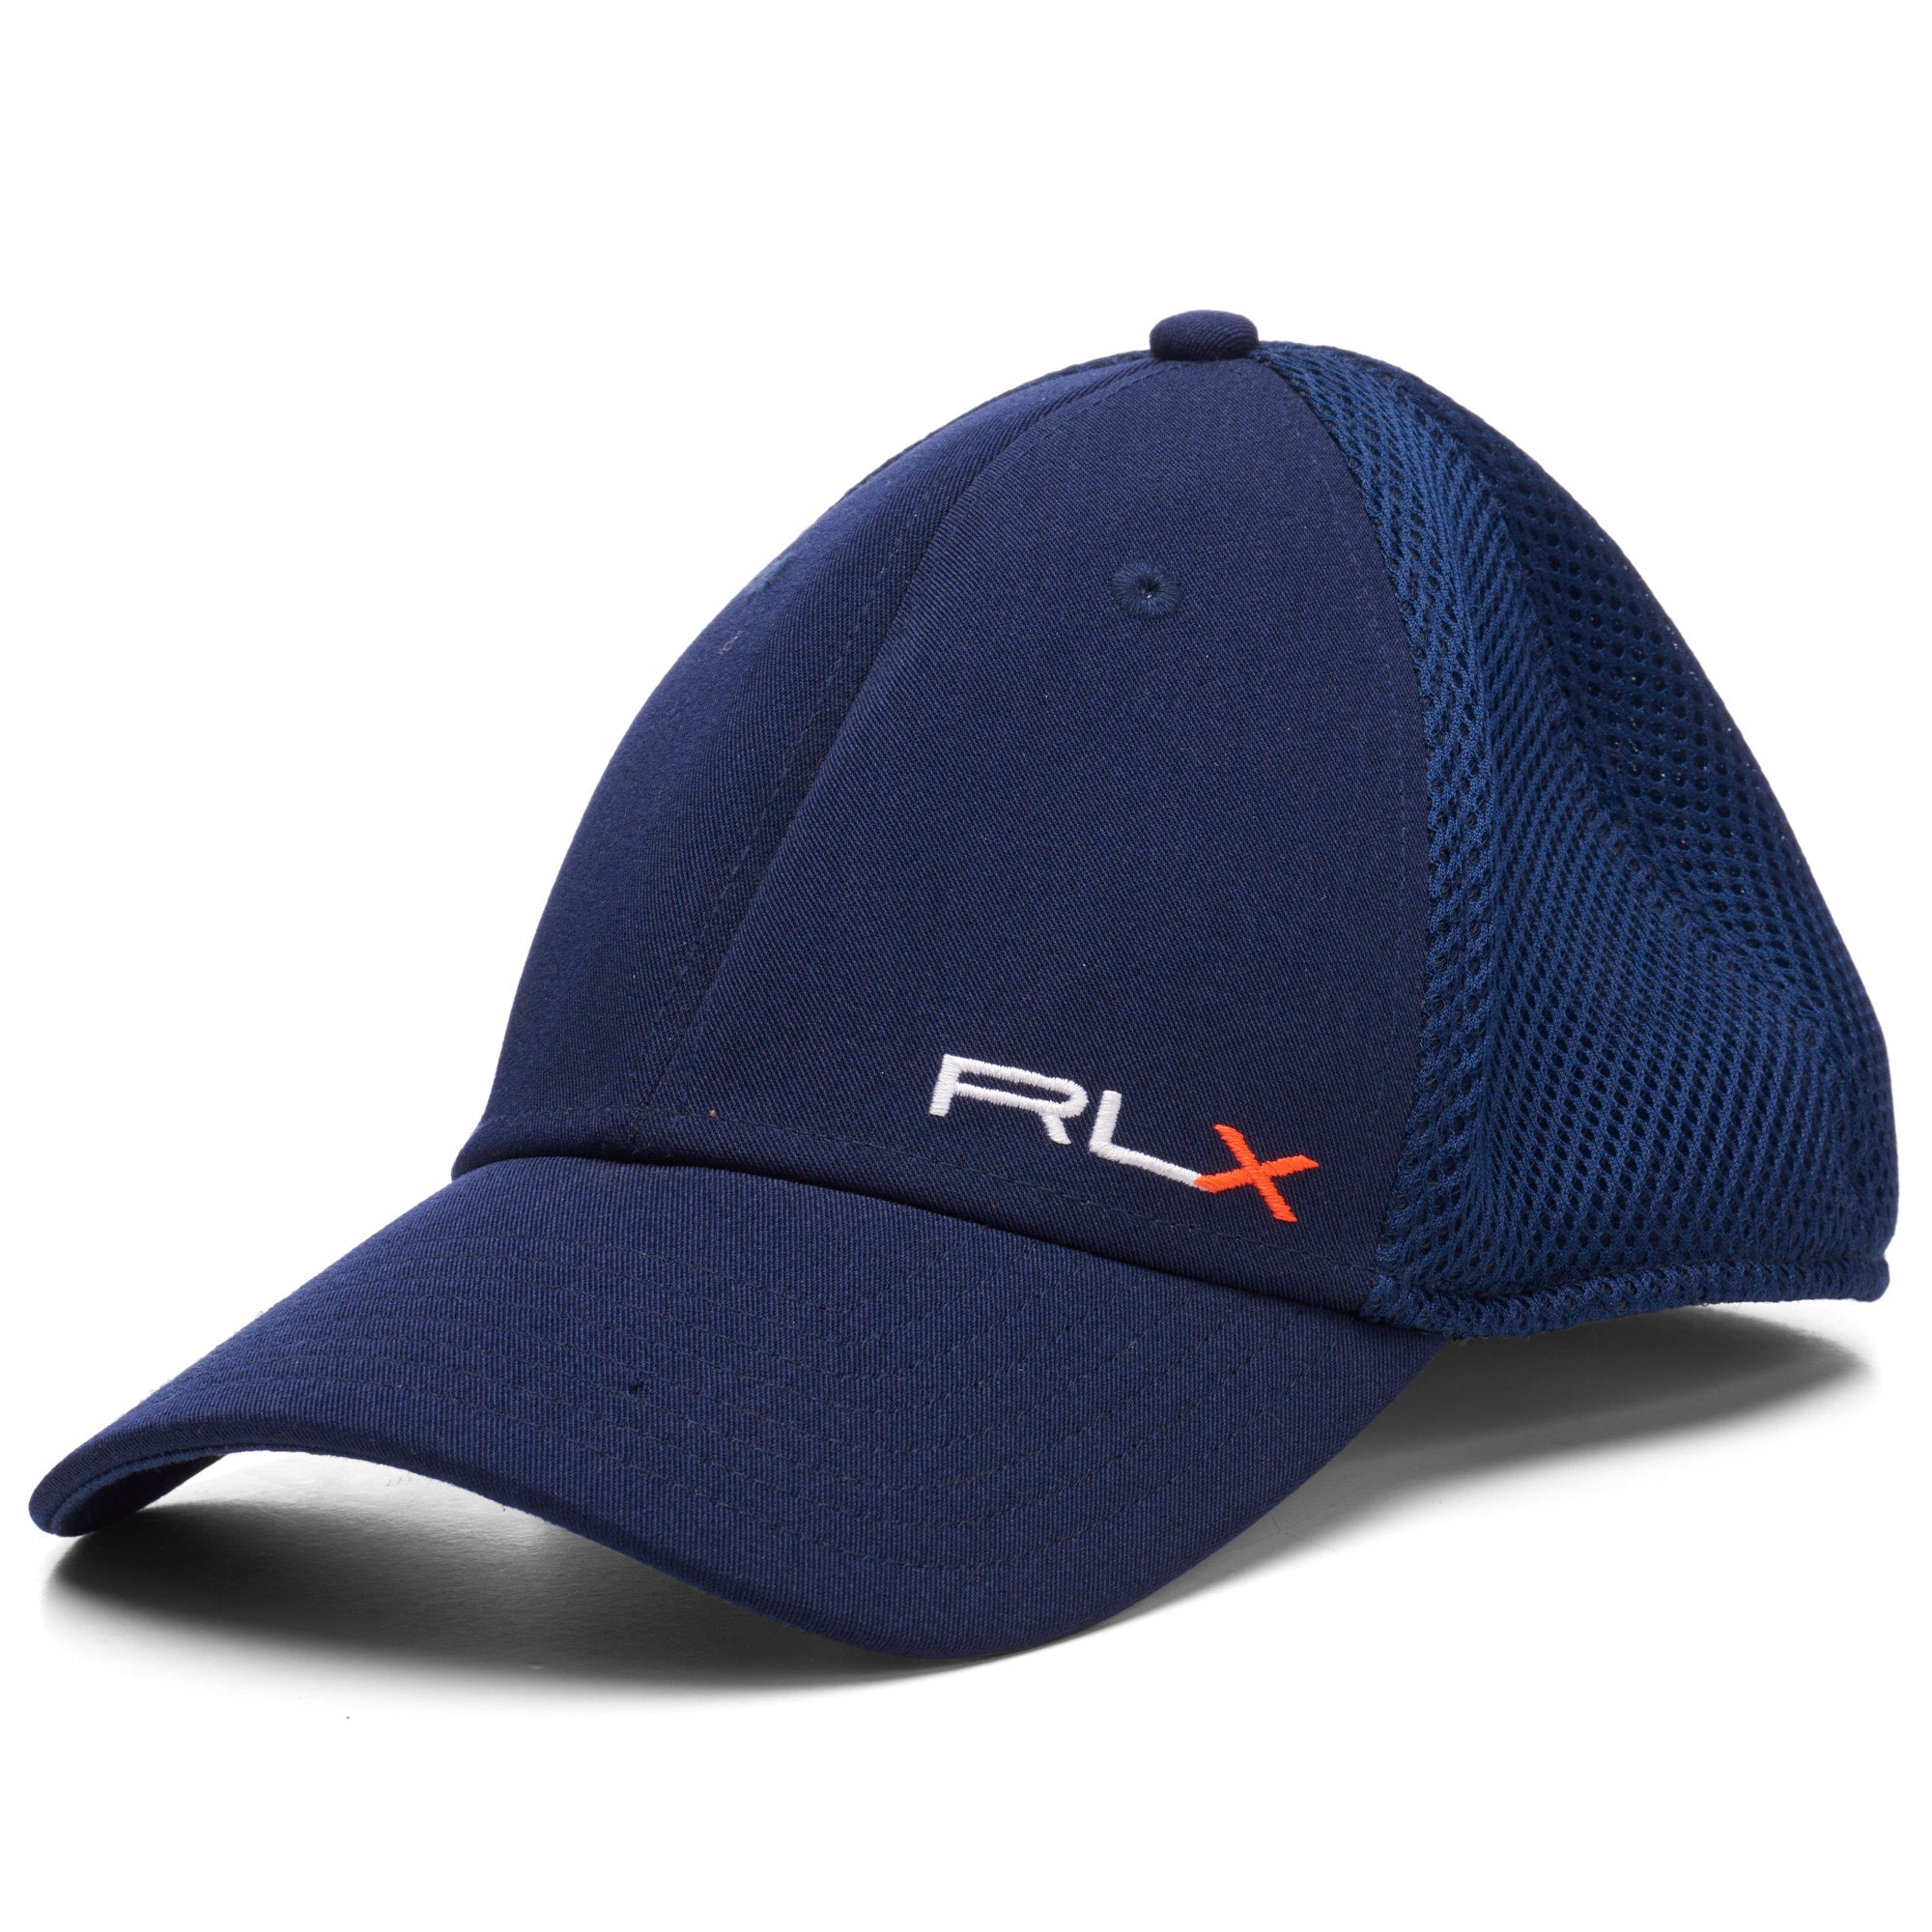 RALPH LAUREN RLX Blue Cotton Twill Flex Fit Golf Cap NEW Size S/M